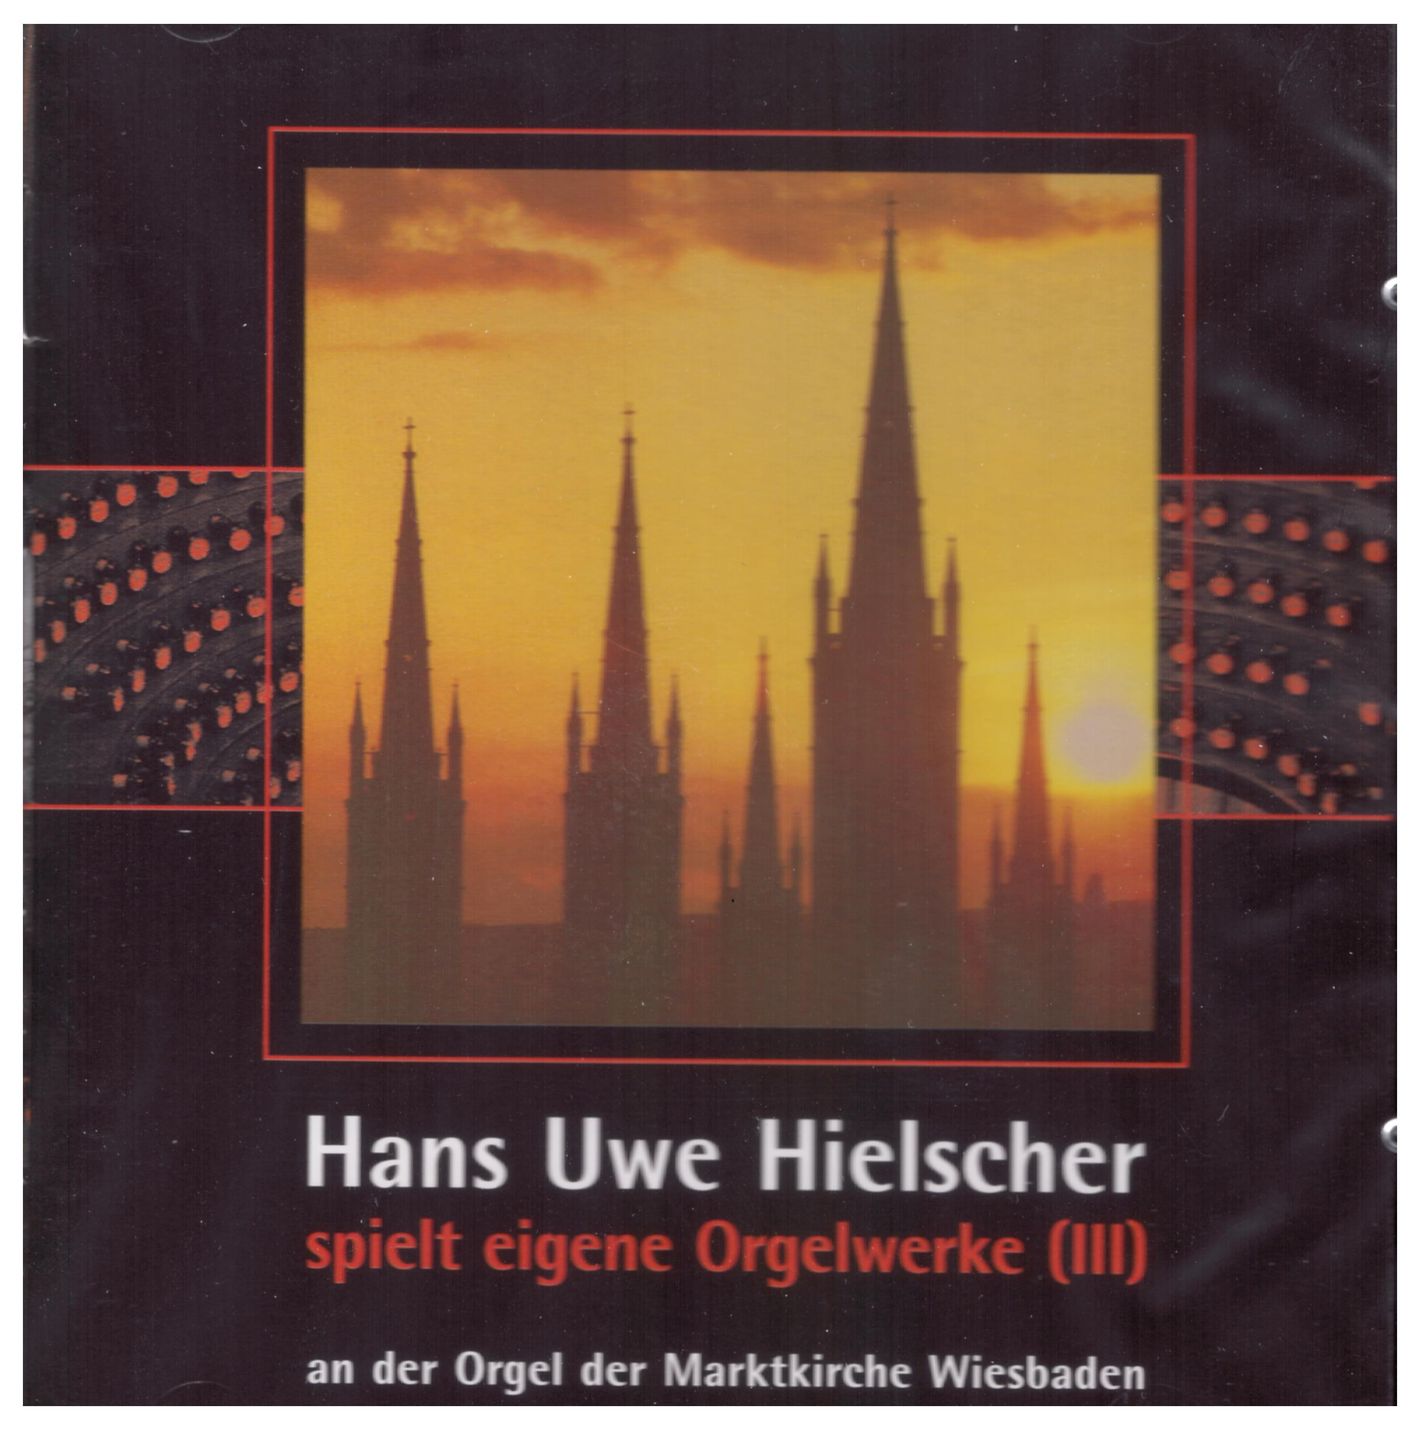 Hans Uwe Hielscher plays own organ works, Vol. III